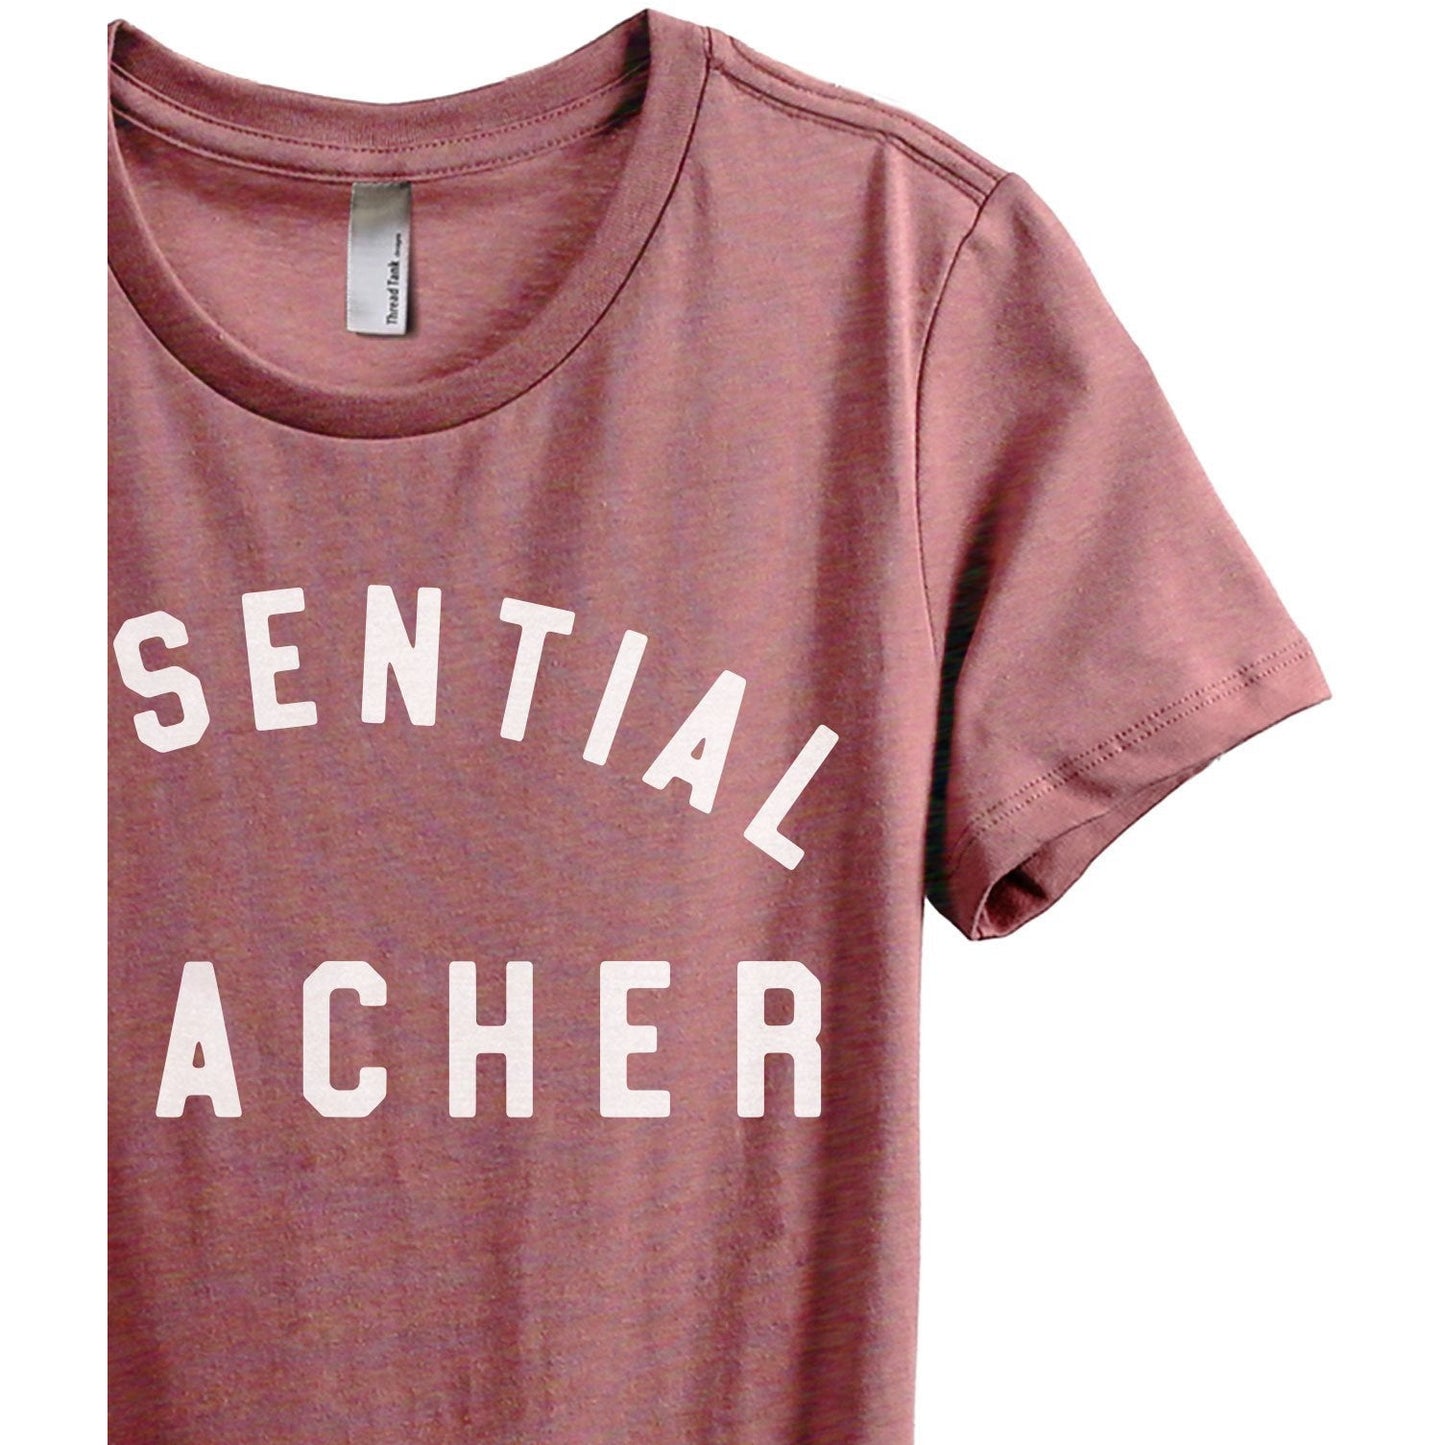 Essential Teacher Women's Relaxed Crewneck T-Shirt Top Tee Heather Rouge Grey Zoom Details